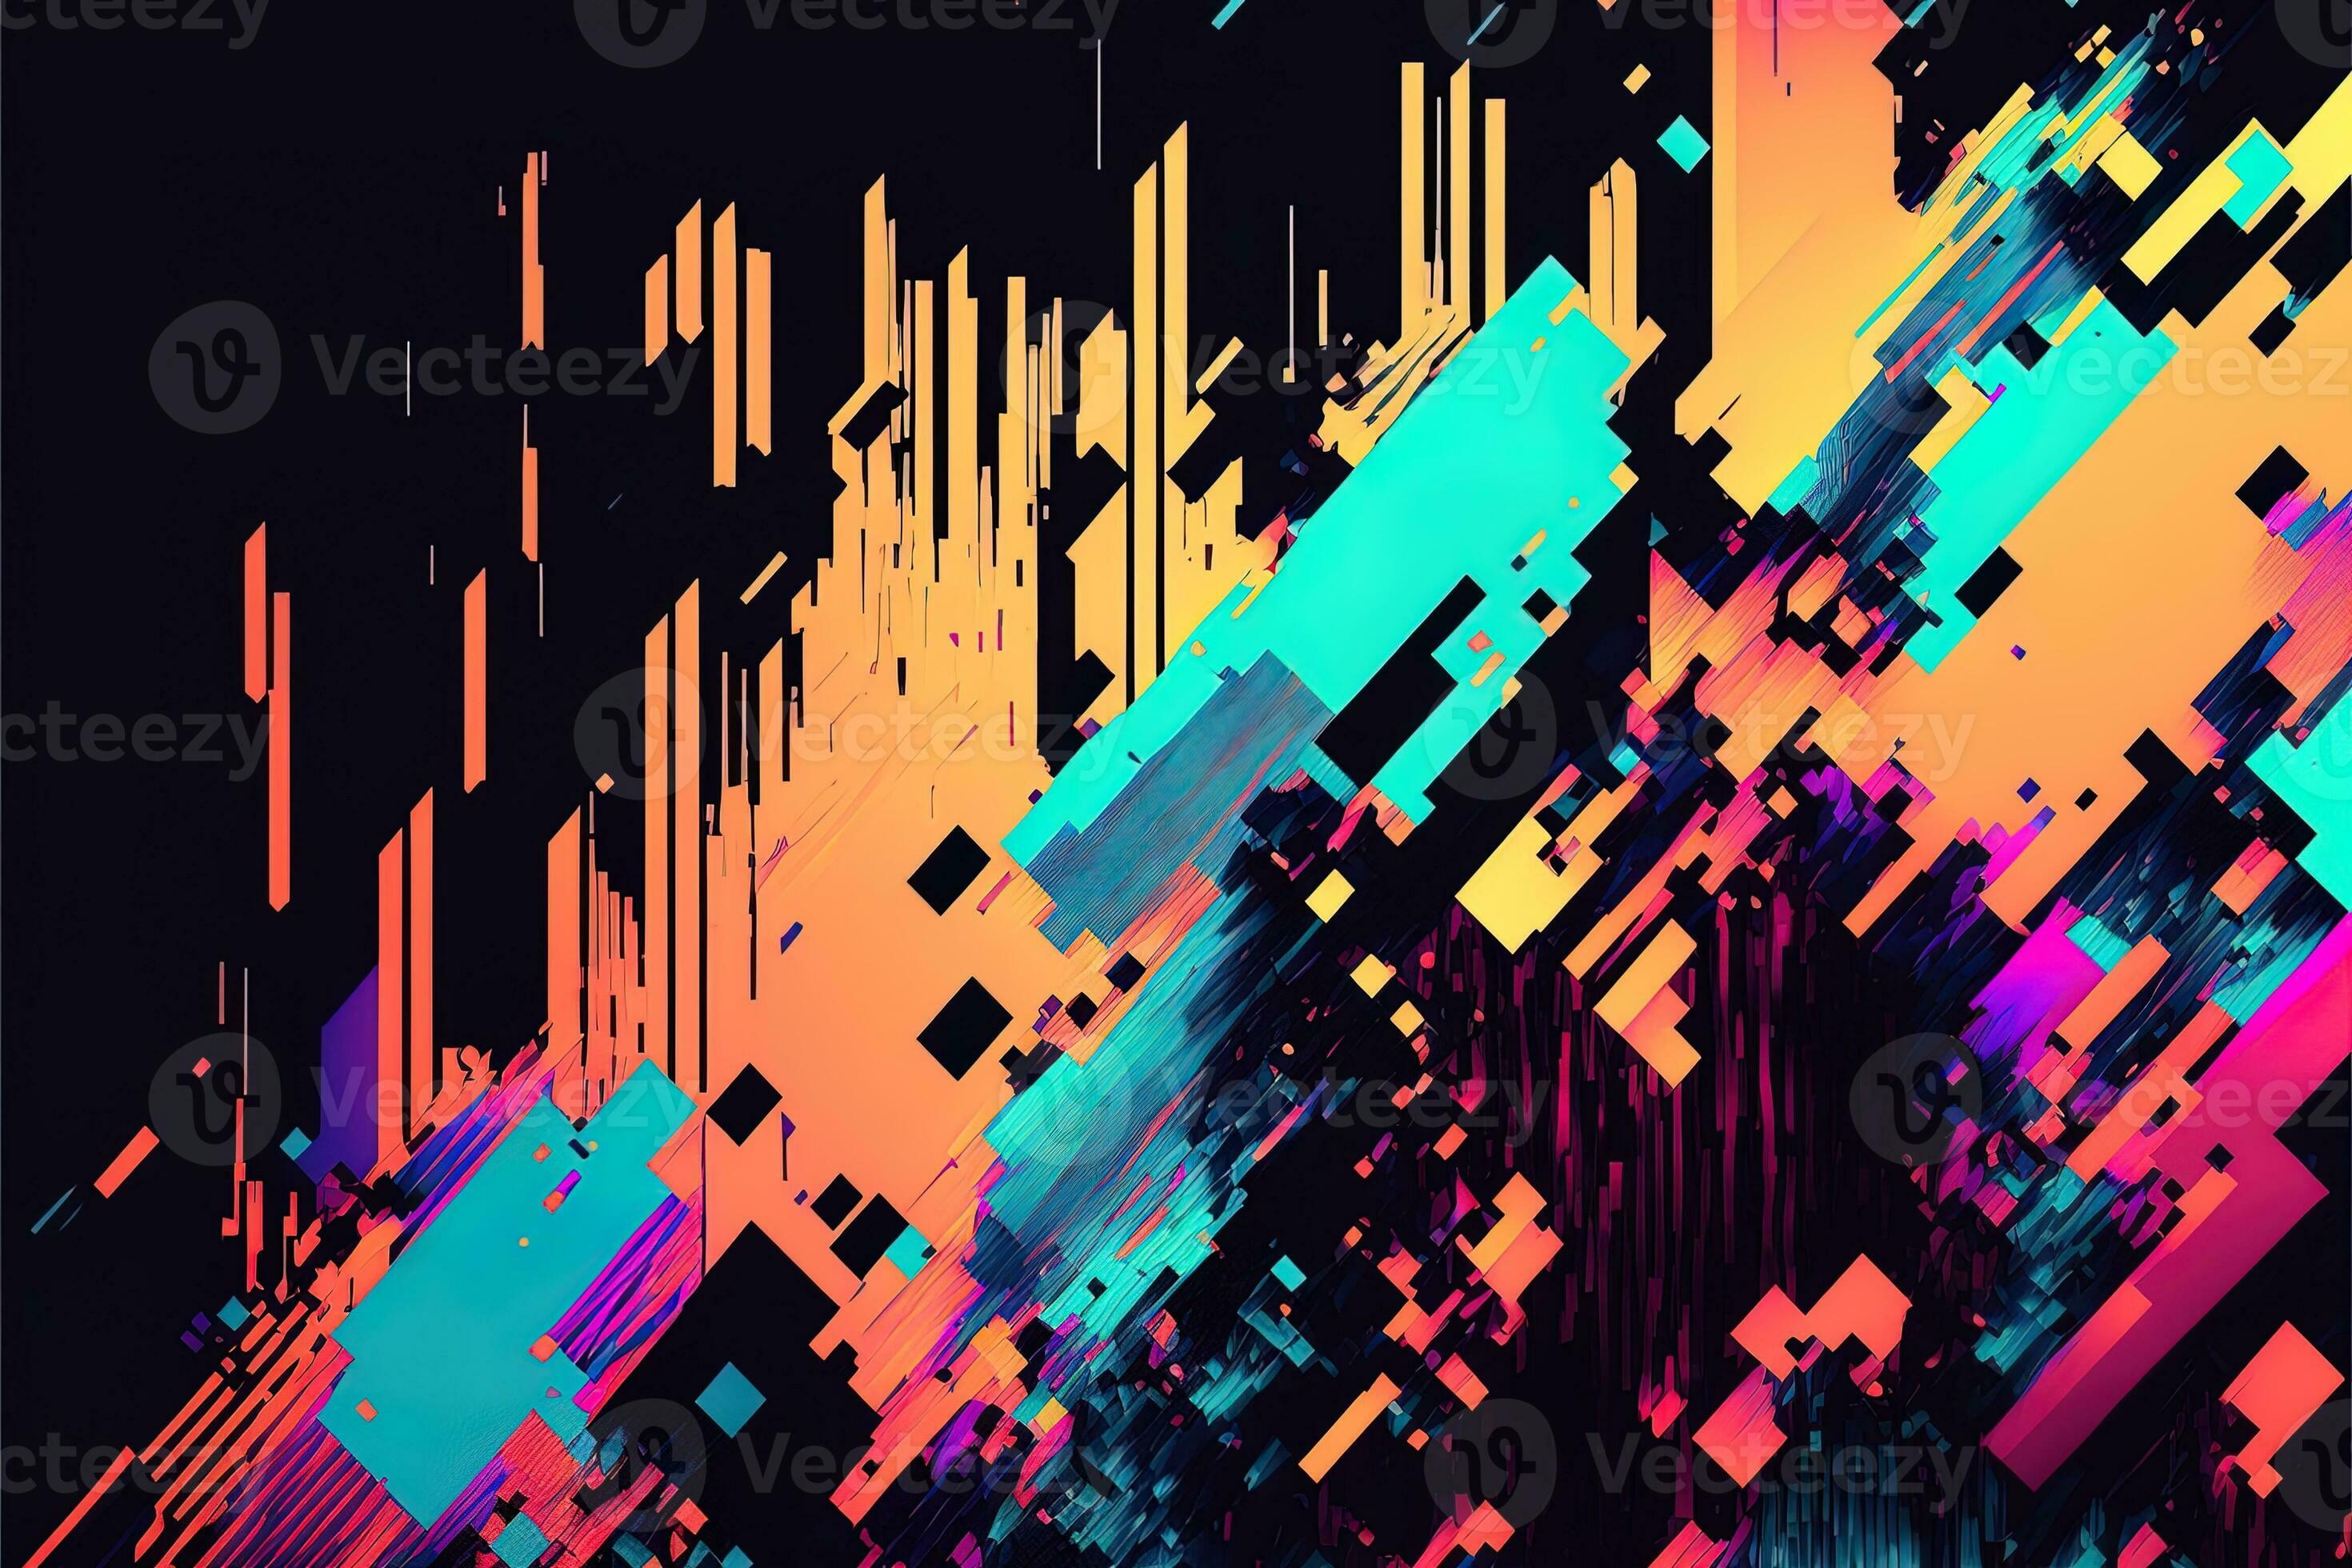 Abstract background with interlaced digital glitch and distortion effect. Futuristic cyberpunk design. Retro futurism, web punk, rave 80s 90s cyberpunk aesthetic techno neon colors